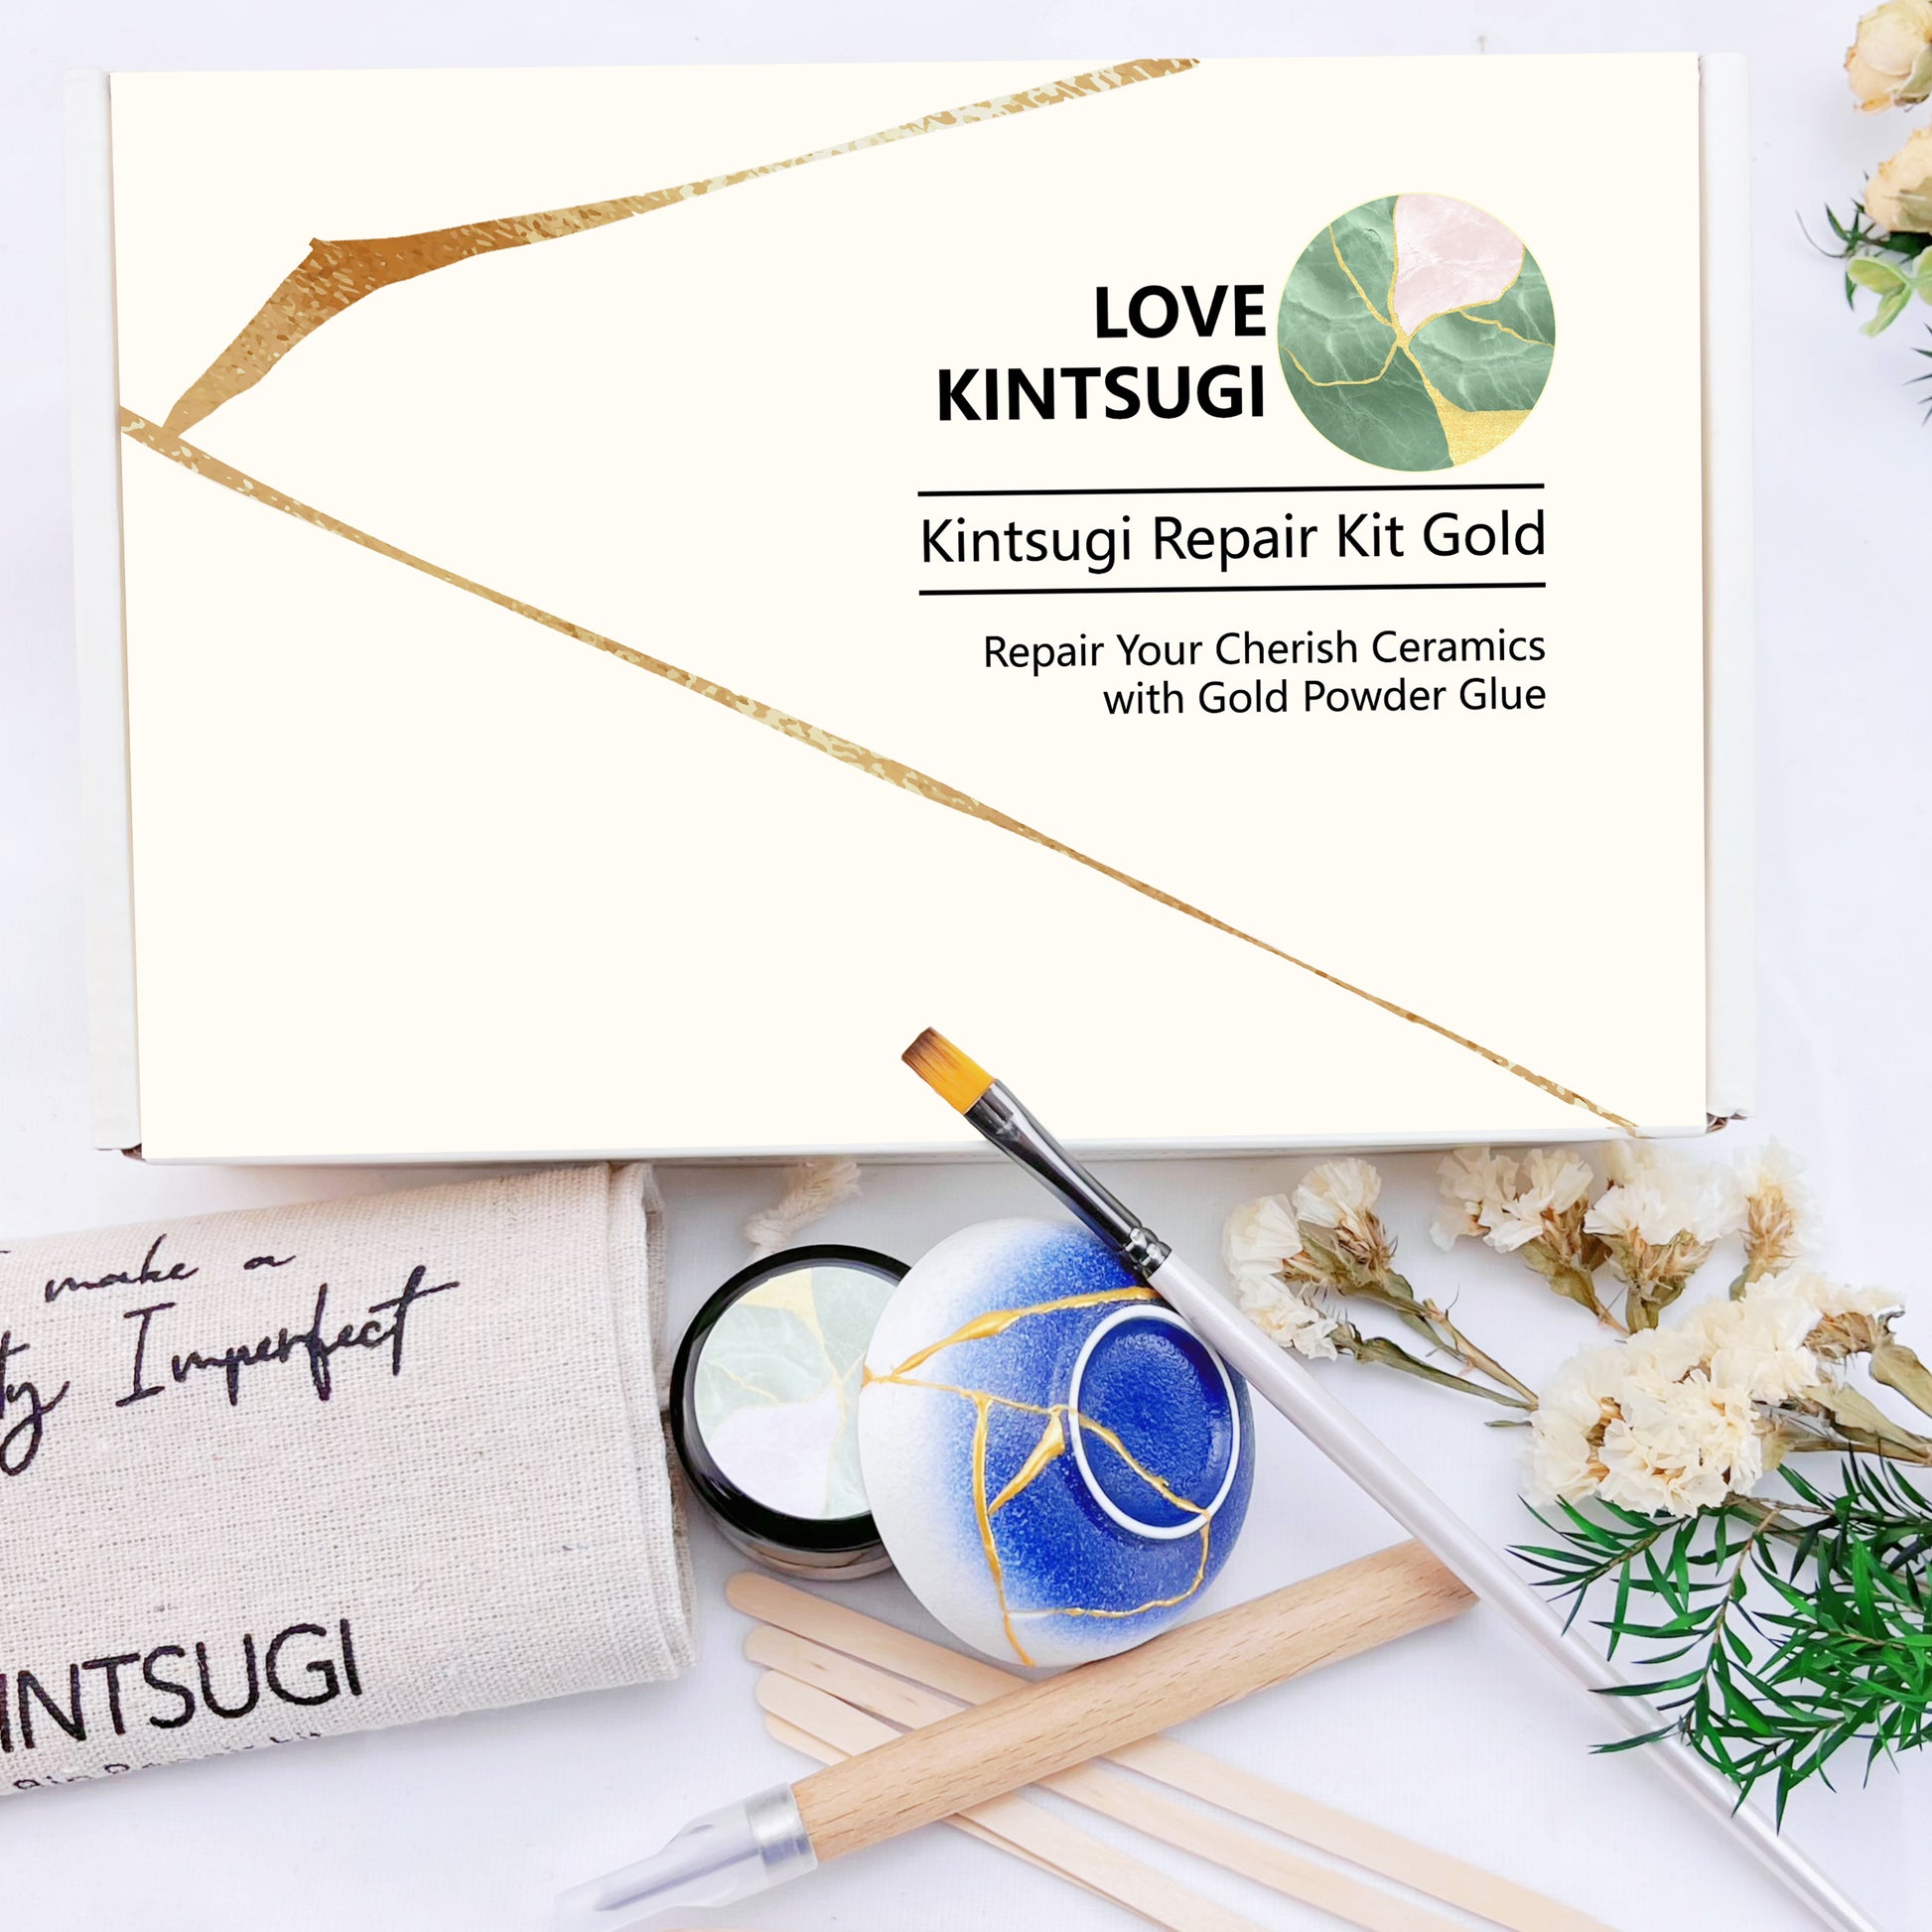  CHIYU Kintsugi Repair kit: Modern Repair Kit - Gold - Gold Glue  - Food Safe - Dishwasher Safe - The Most Complete and Durable Kintsugi kit  : Health & Household